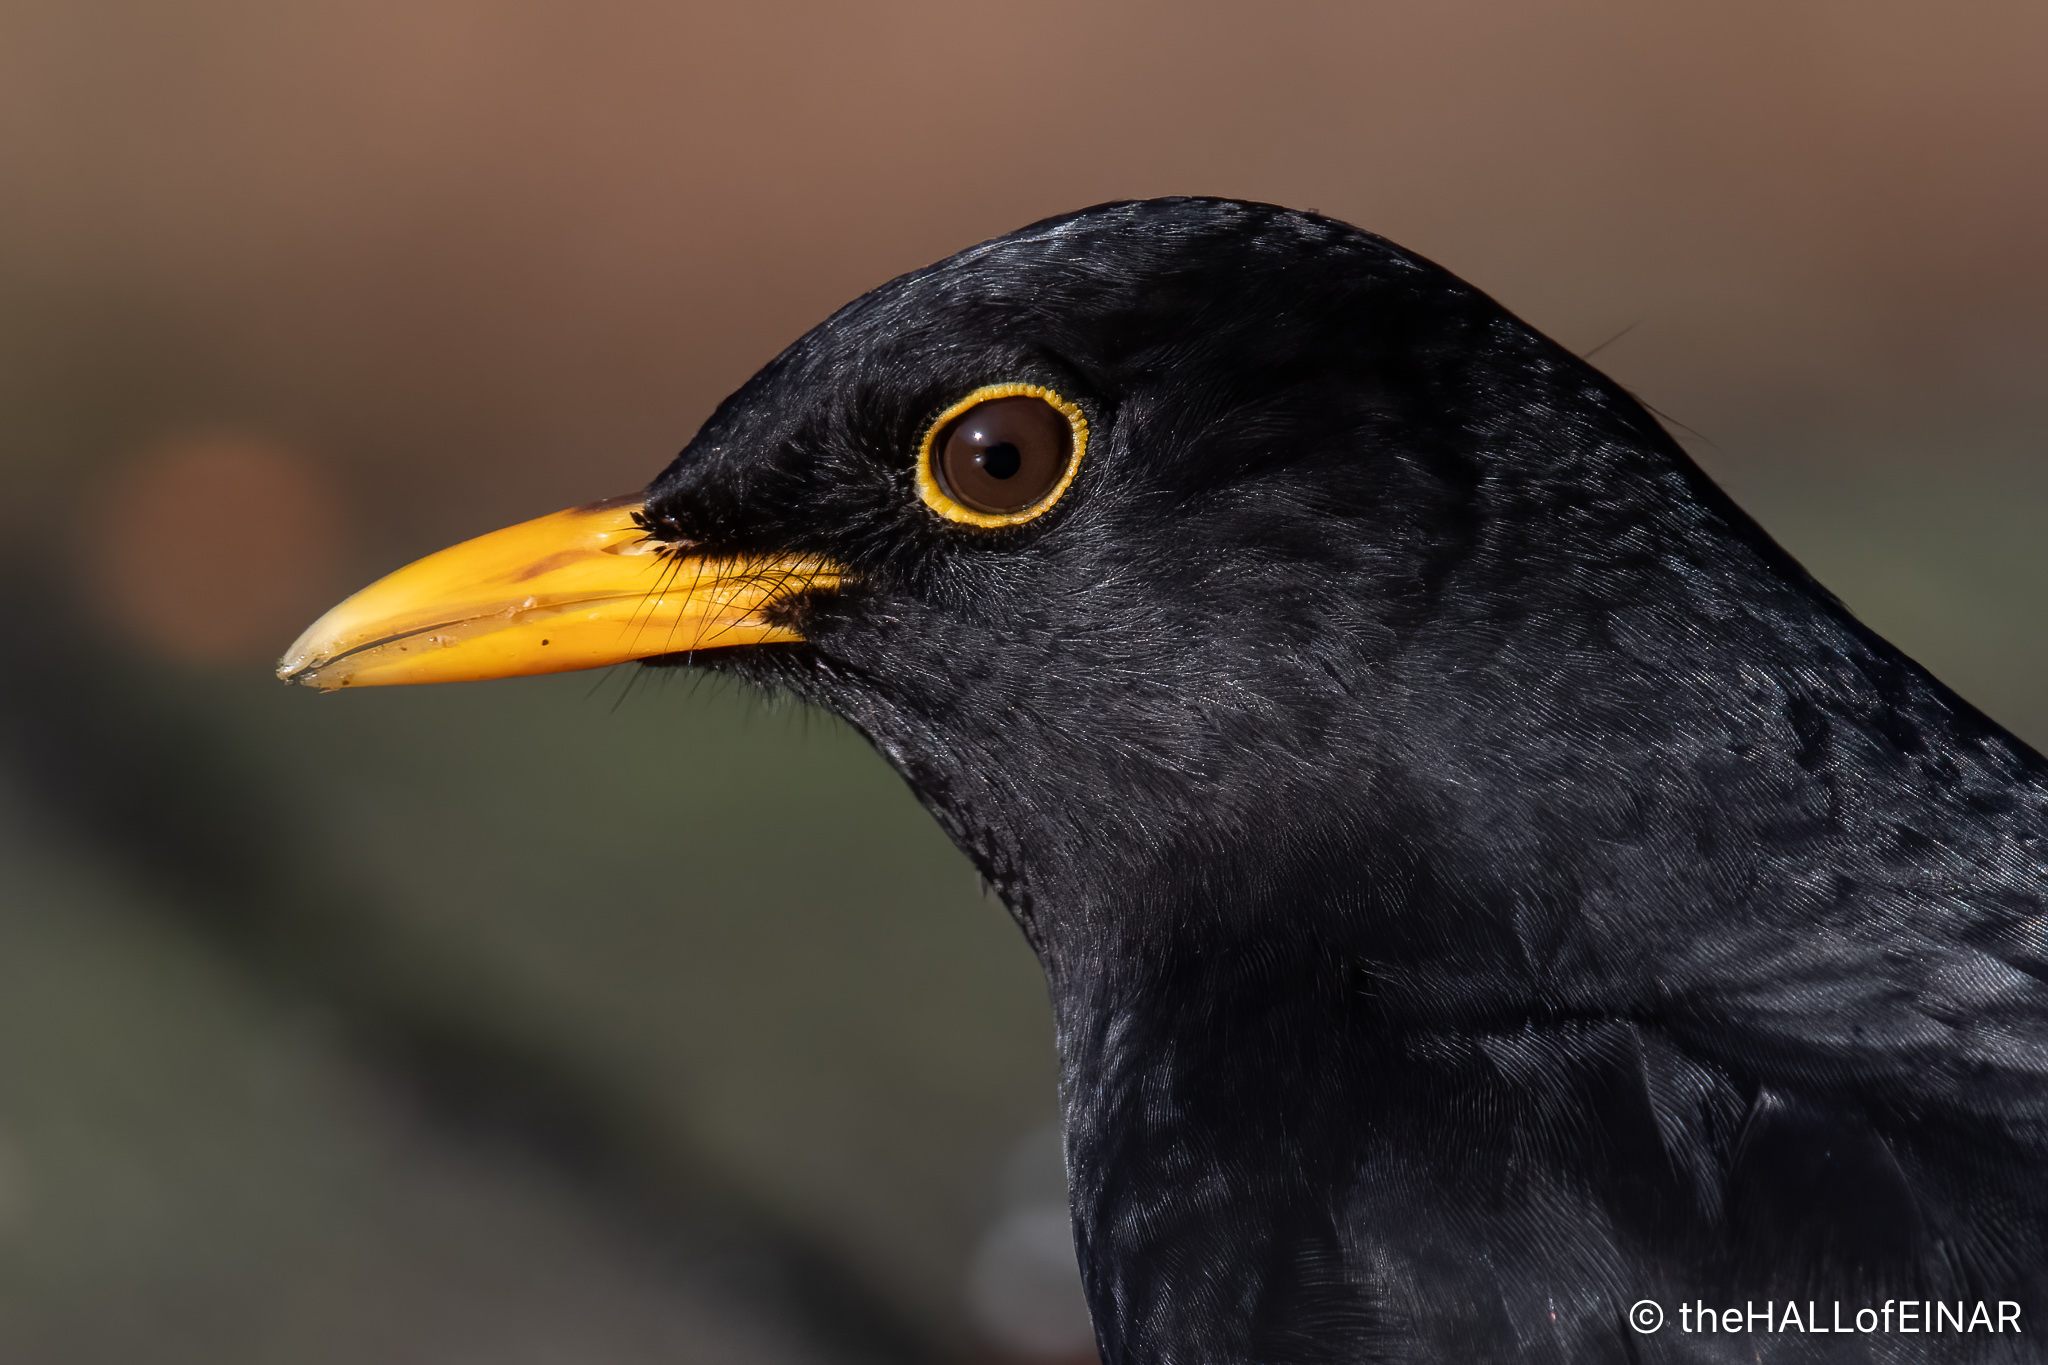 The Blackbird habit – David at the HALL of EINAR